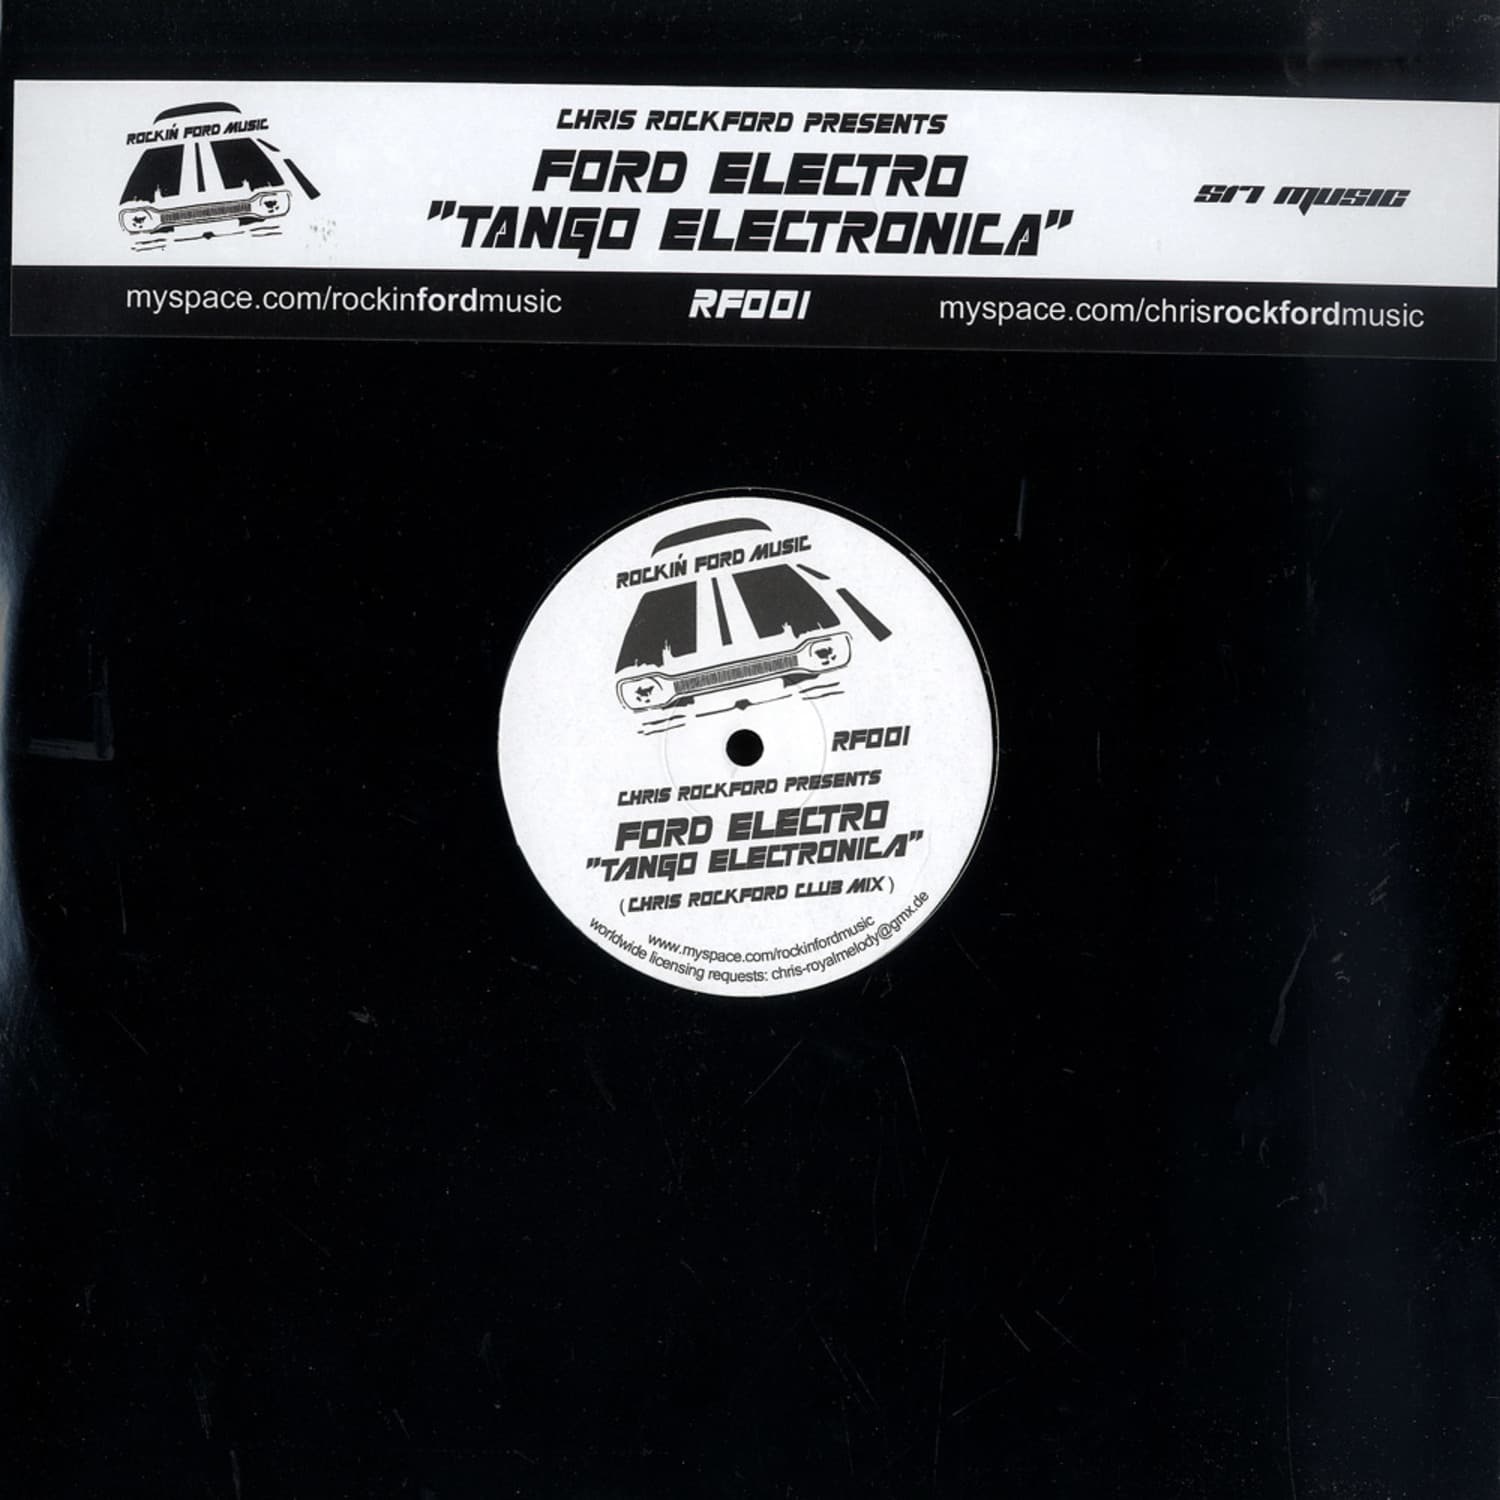 Chris Rockford presents: Ford Electro - TANGO ELECTRONICA